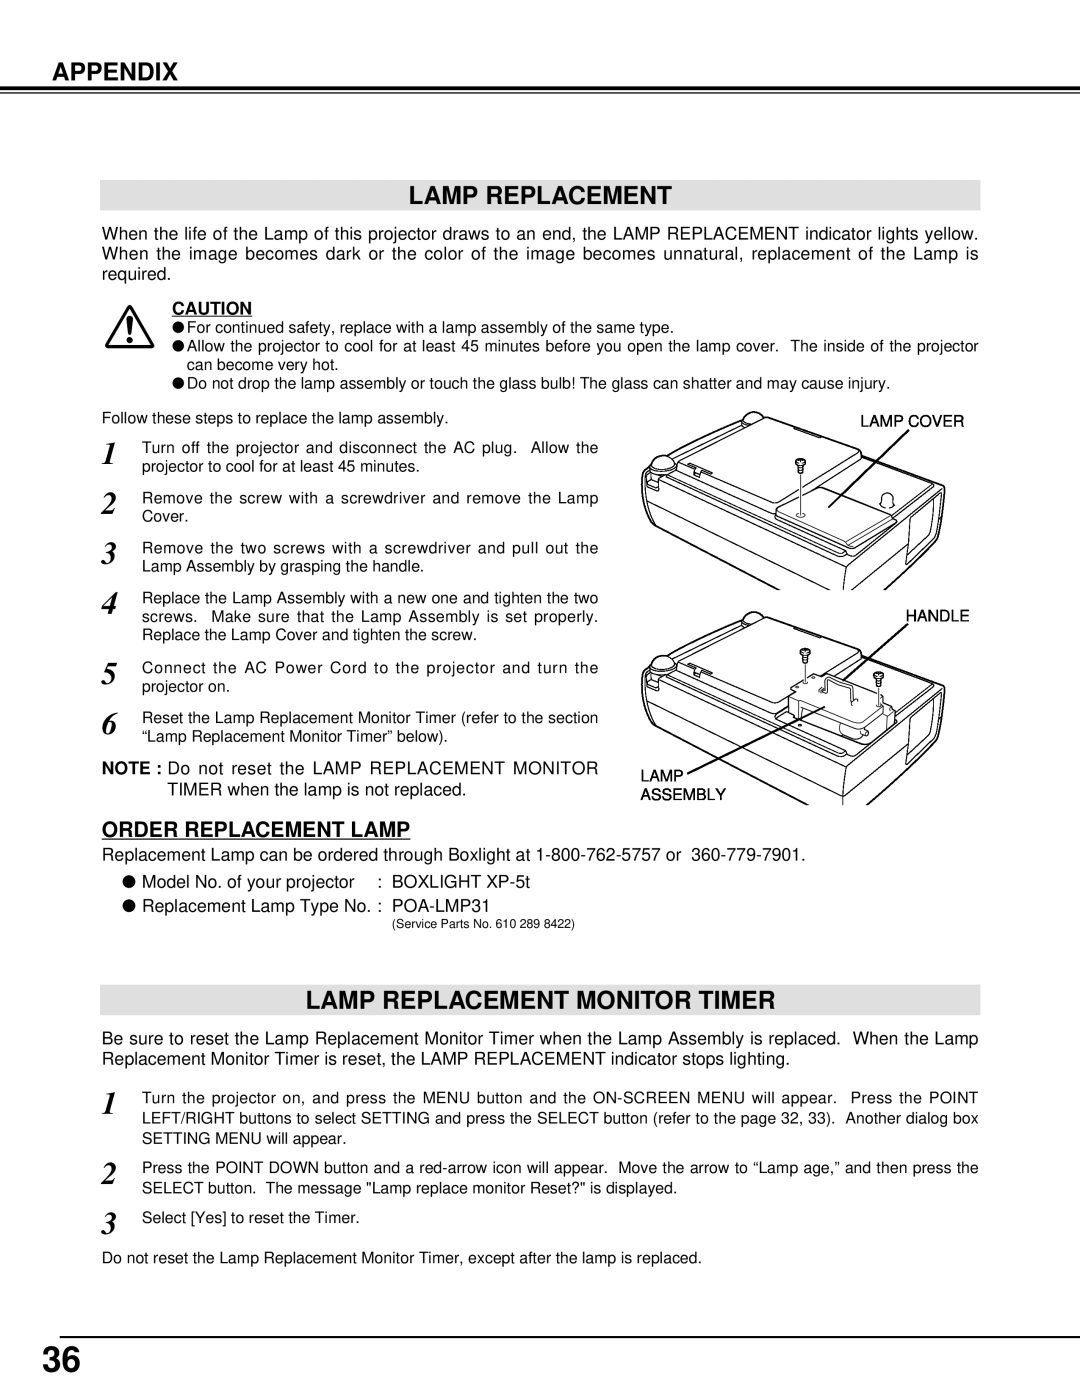 BOXLIGHT XP-5t manual Appendix Lamp Replacement, Lamp Replacement Monitor Timer, Order Replacement Lamp 